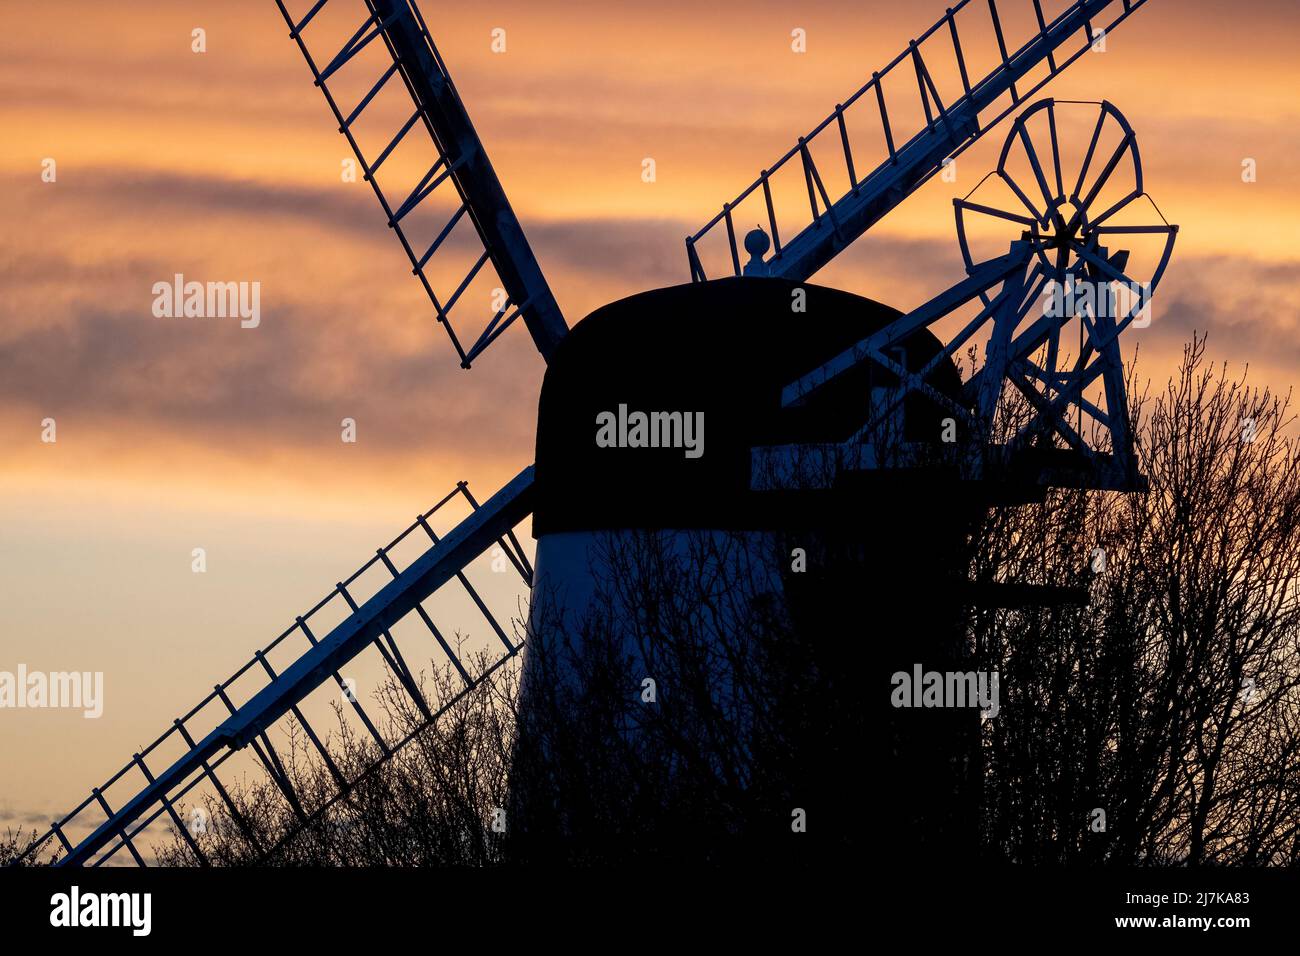 Silhouette of windmill against golden skies at sundown Stock Photo